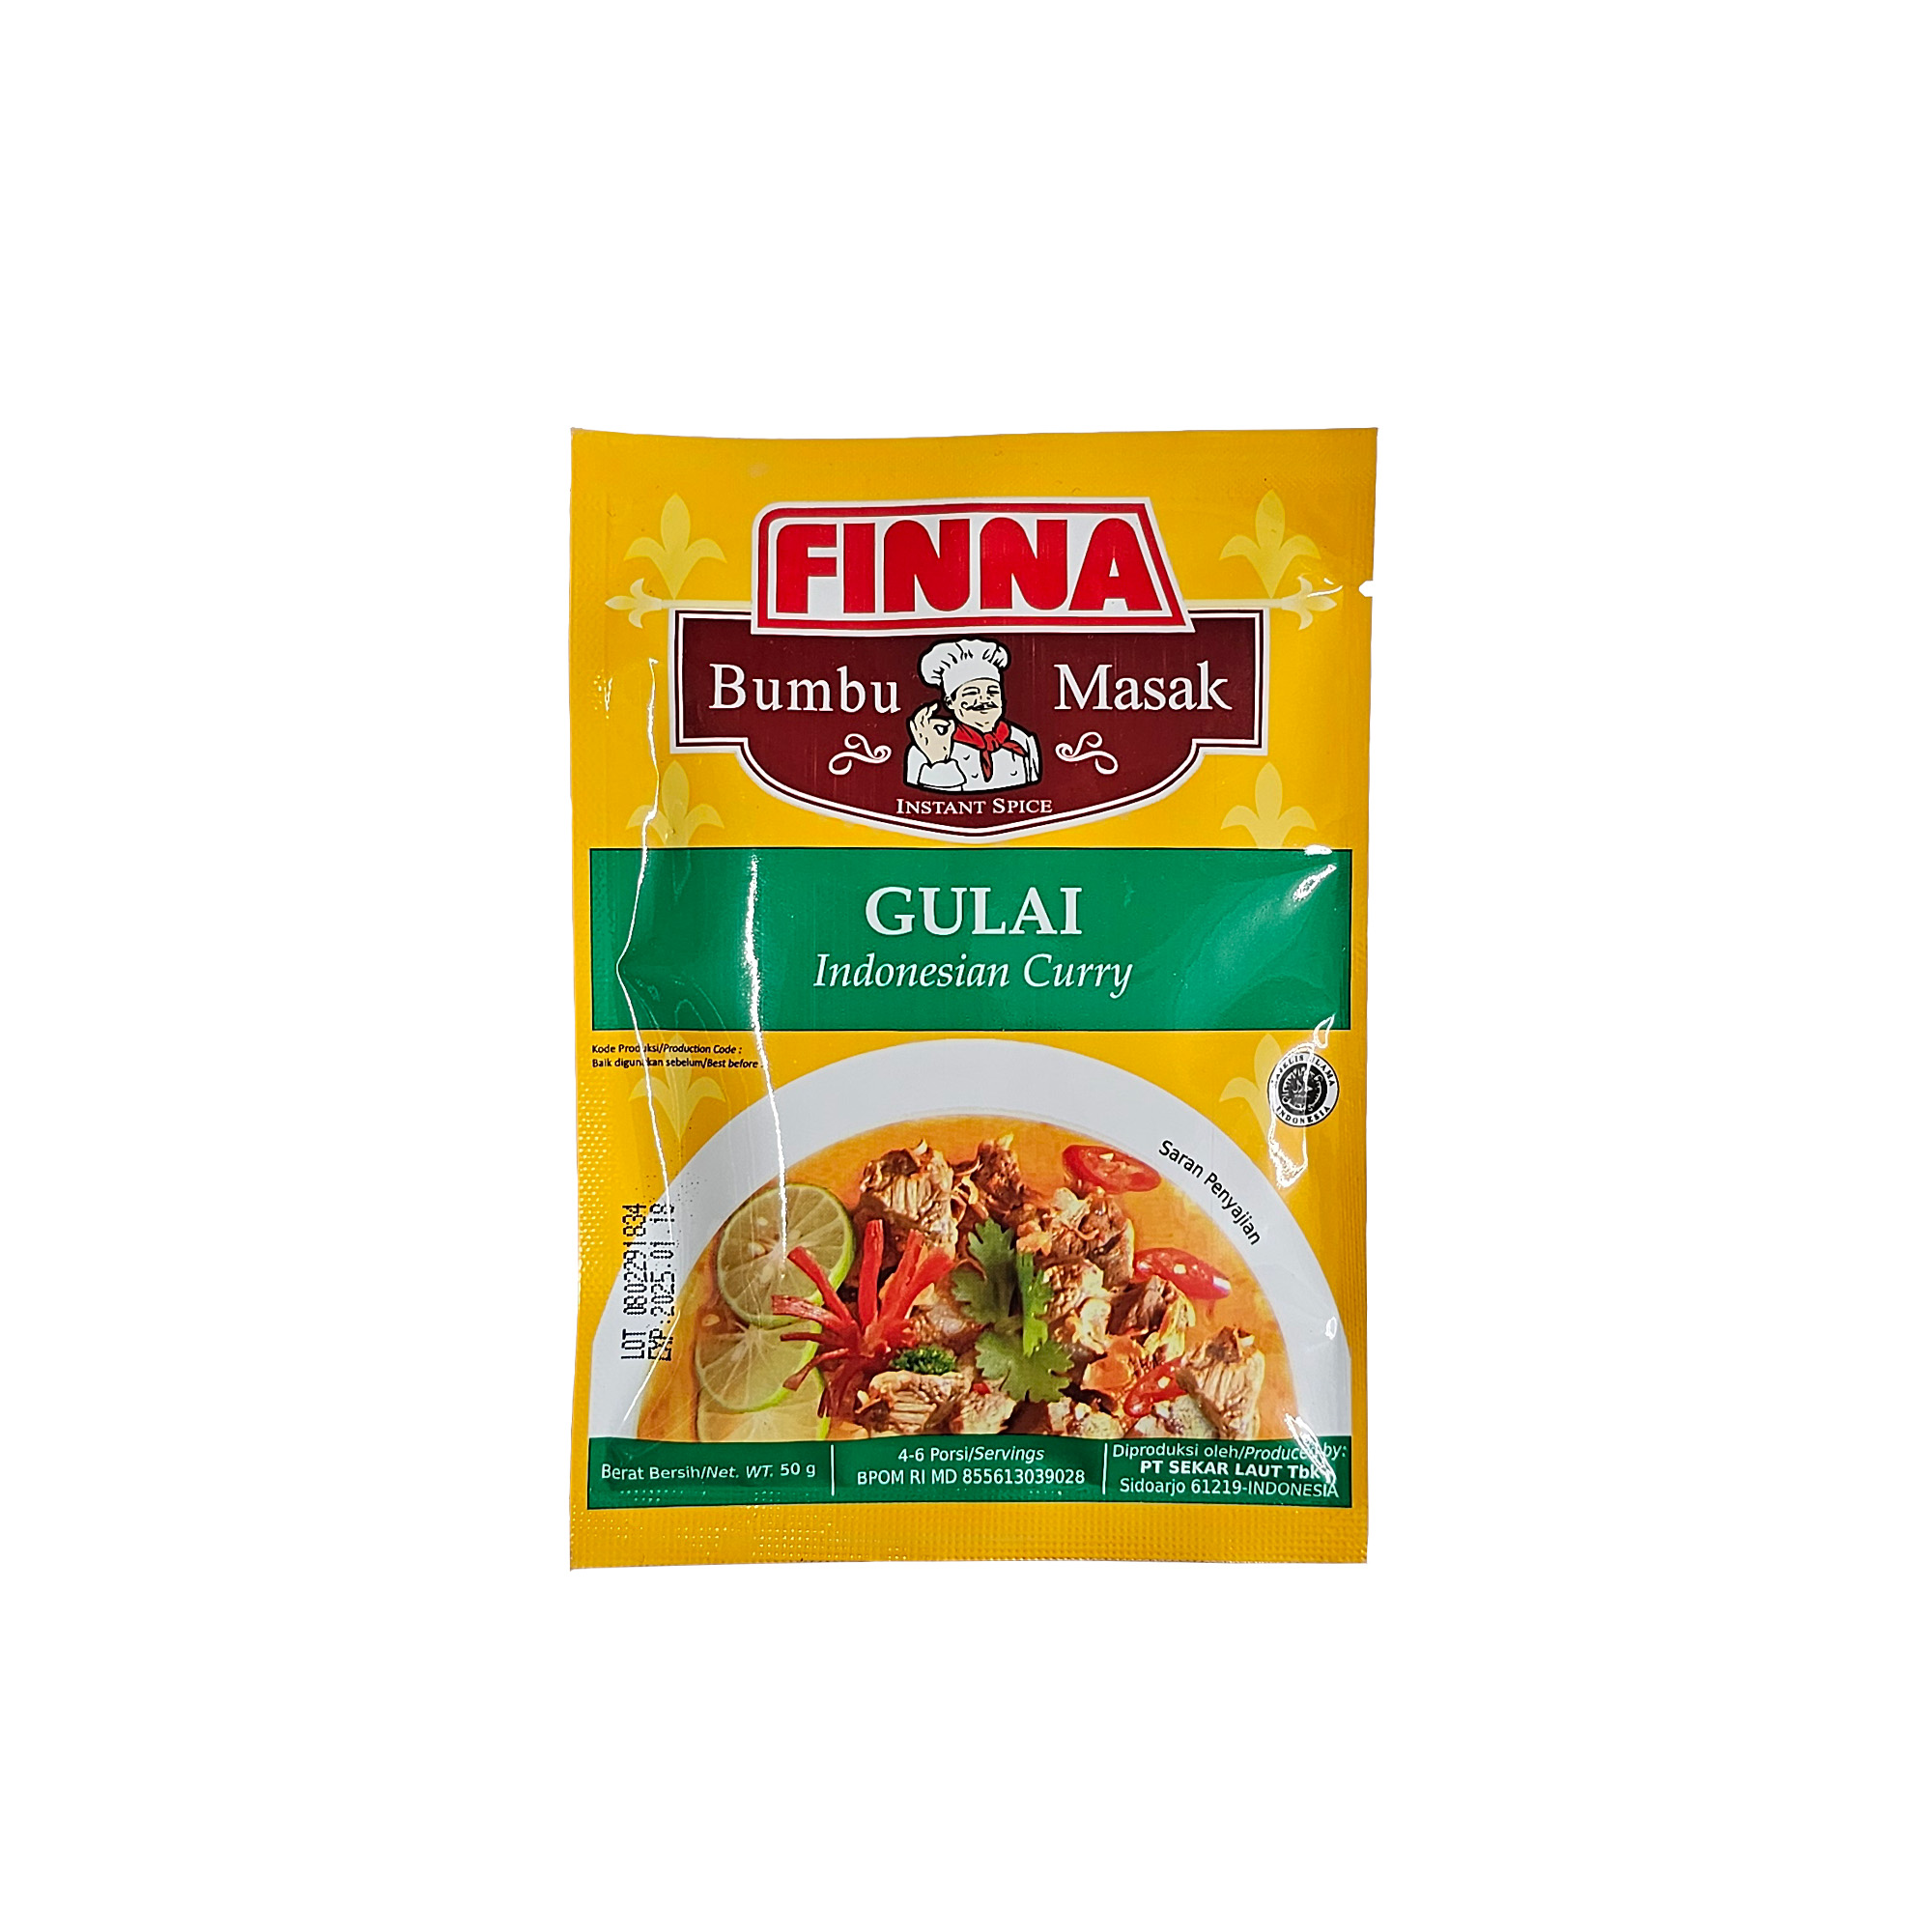 Gulai / Indonesian Curry (Finna)